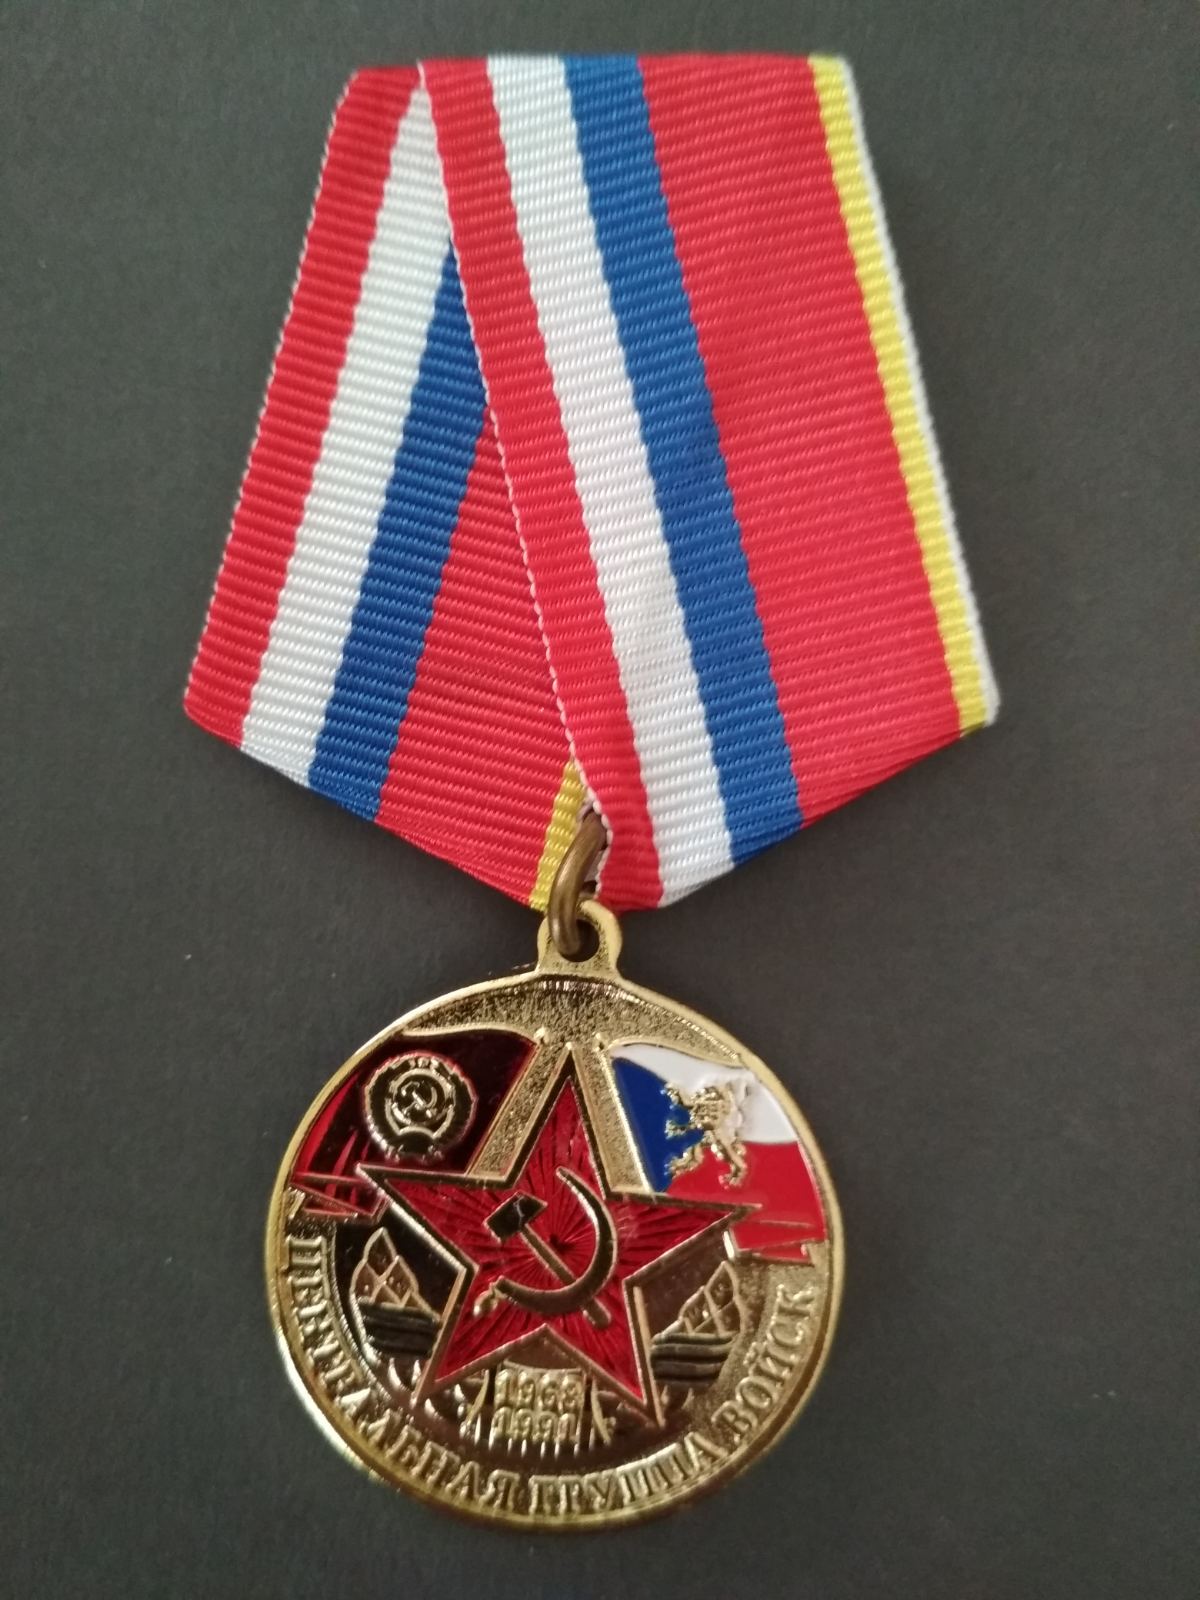 Медаль "Центральная группа войск".